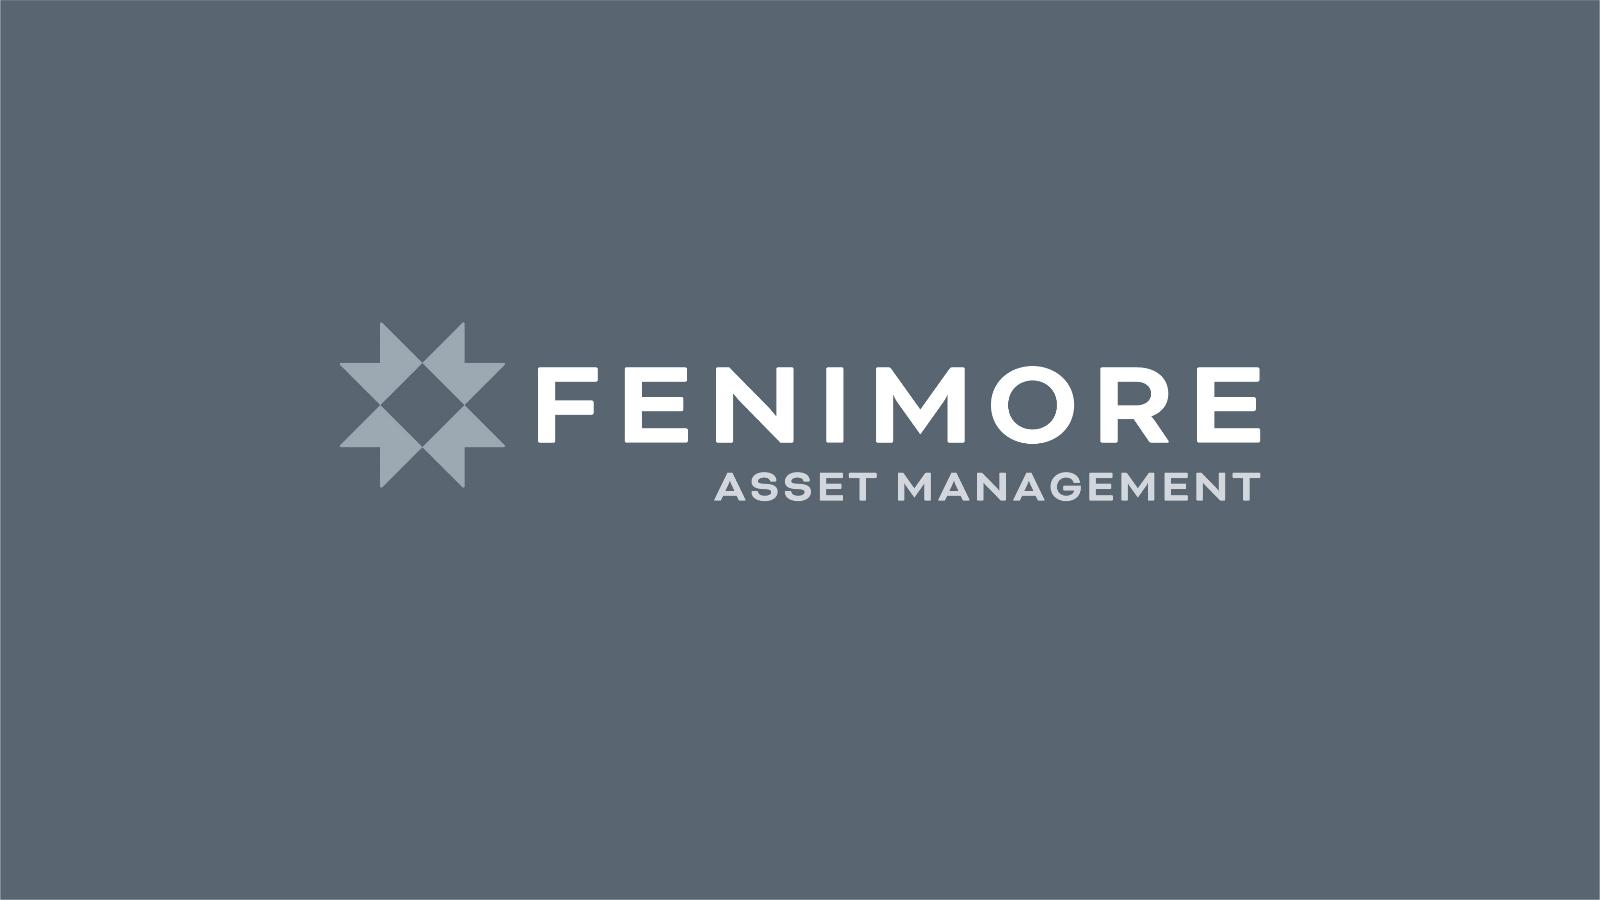 Fenimore Asset Management | grayscale logo on dark